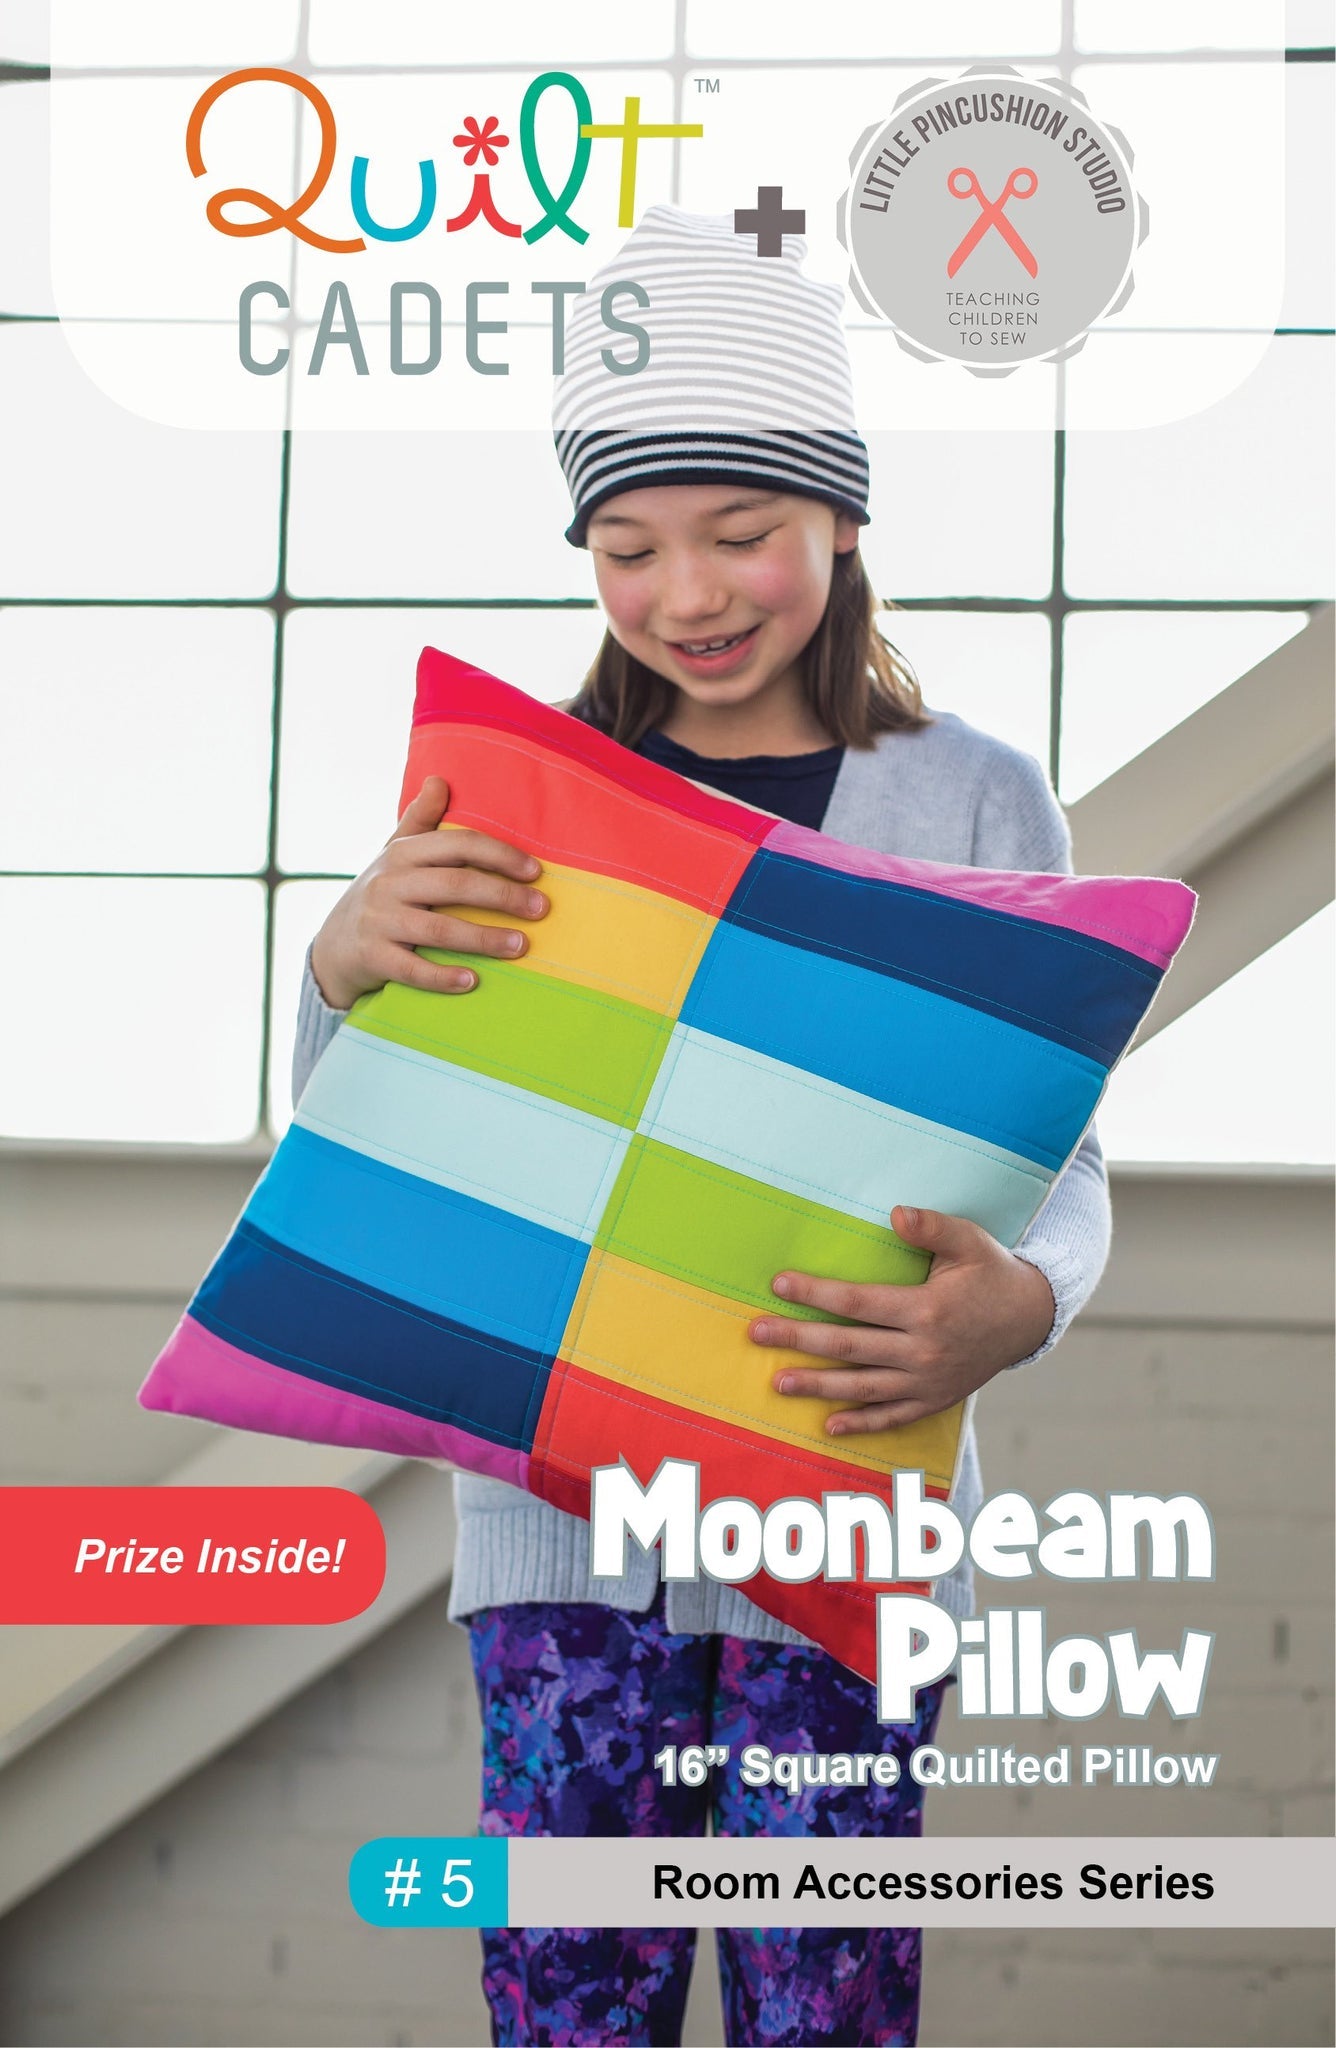 PRE ORDER - Quilt Cadets: Moonbeam Pillows (